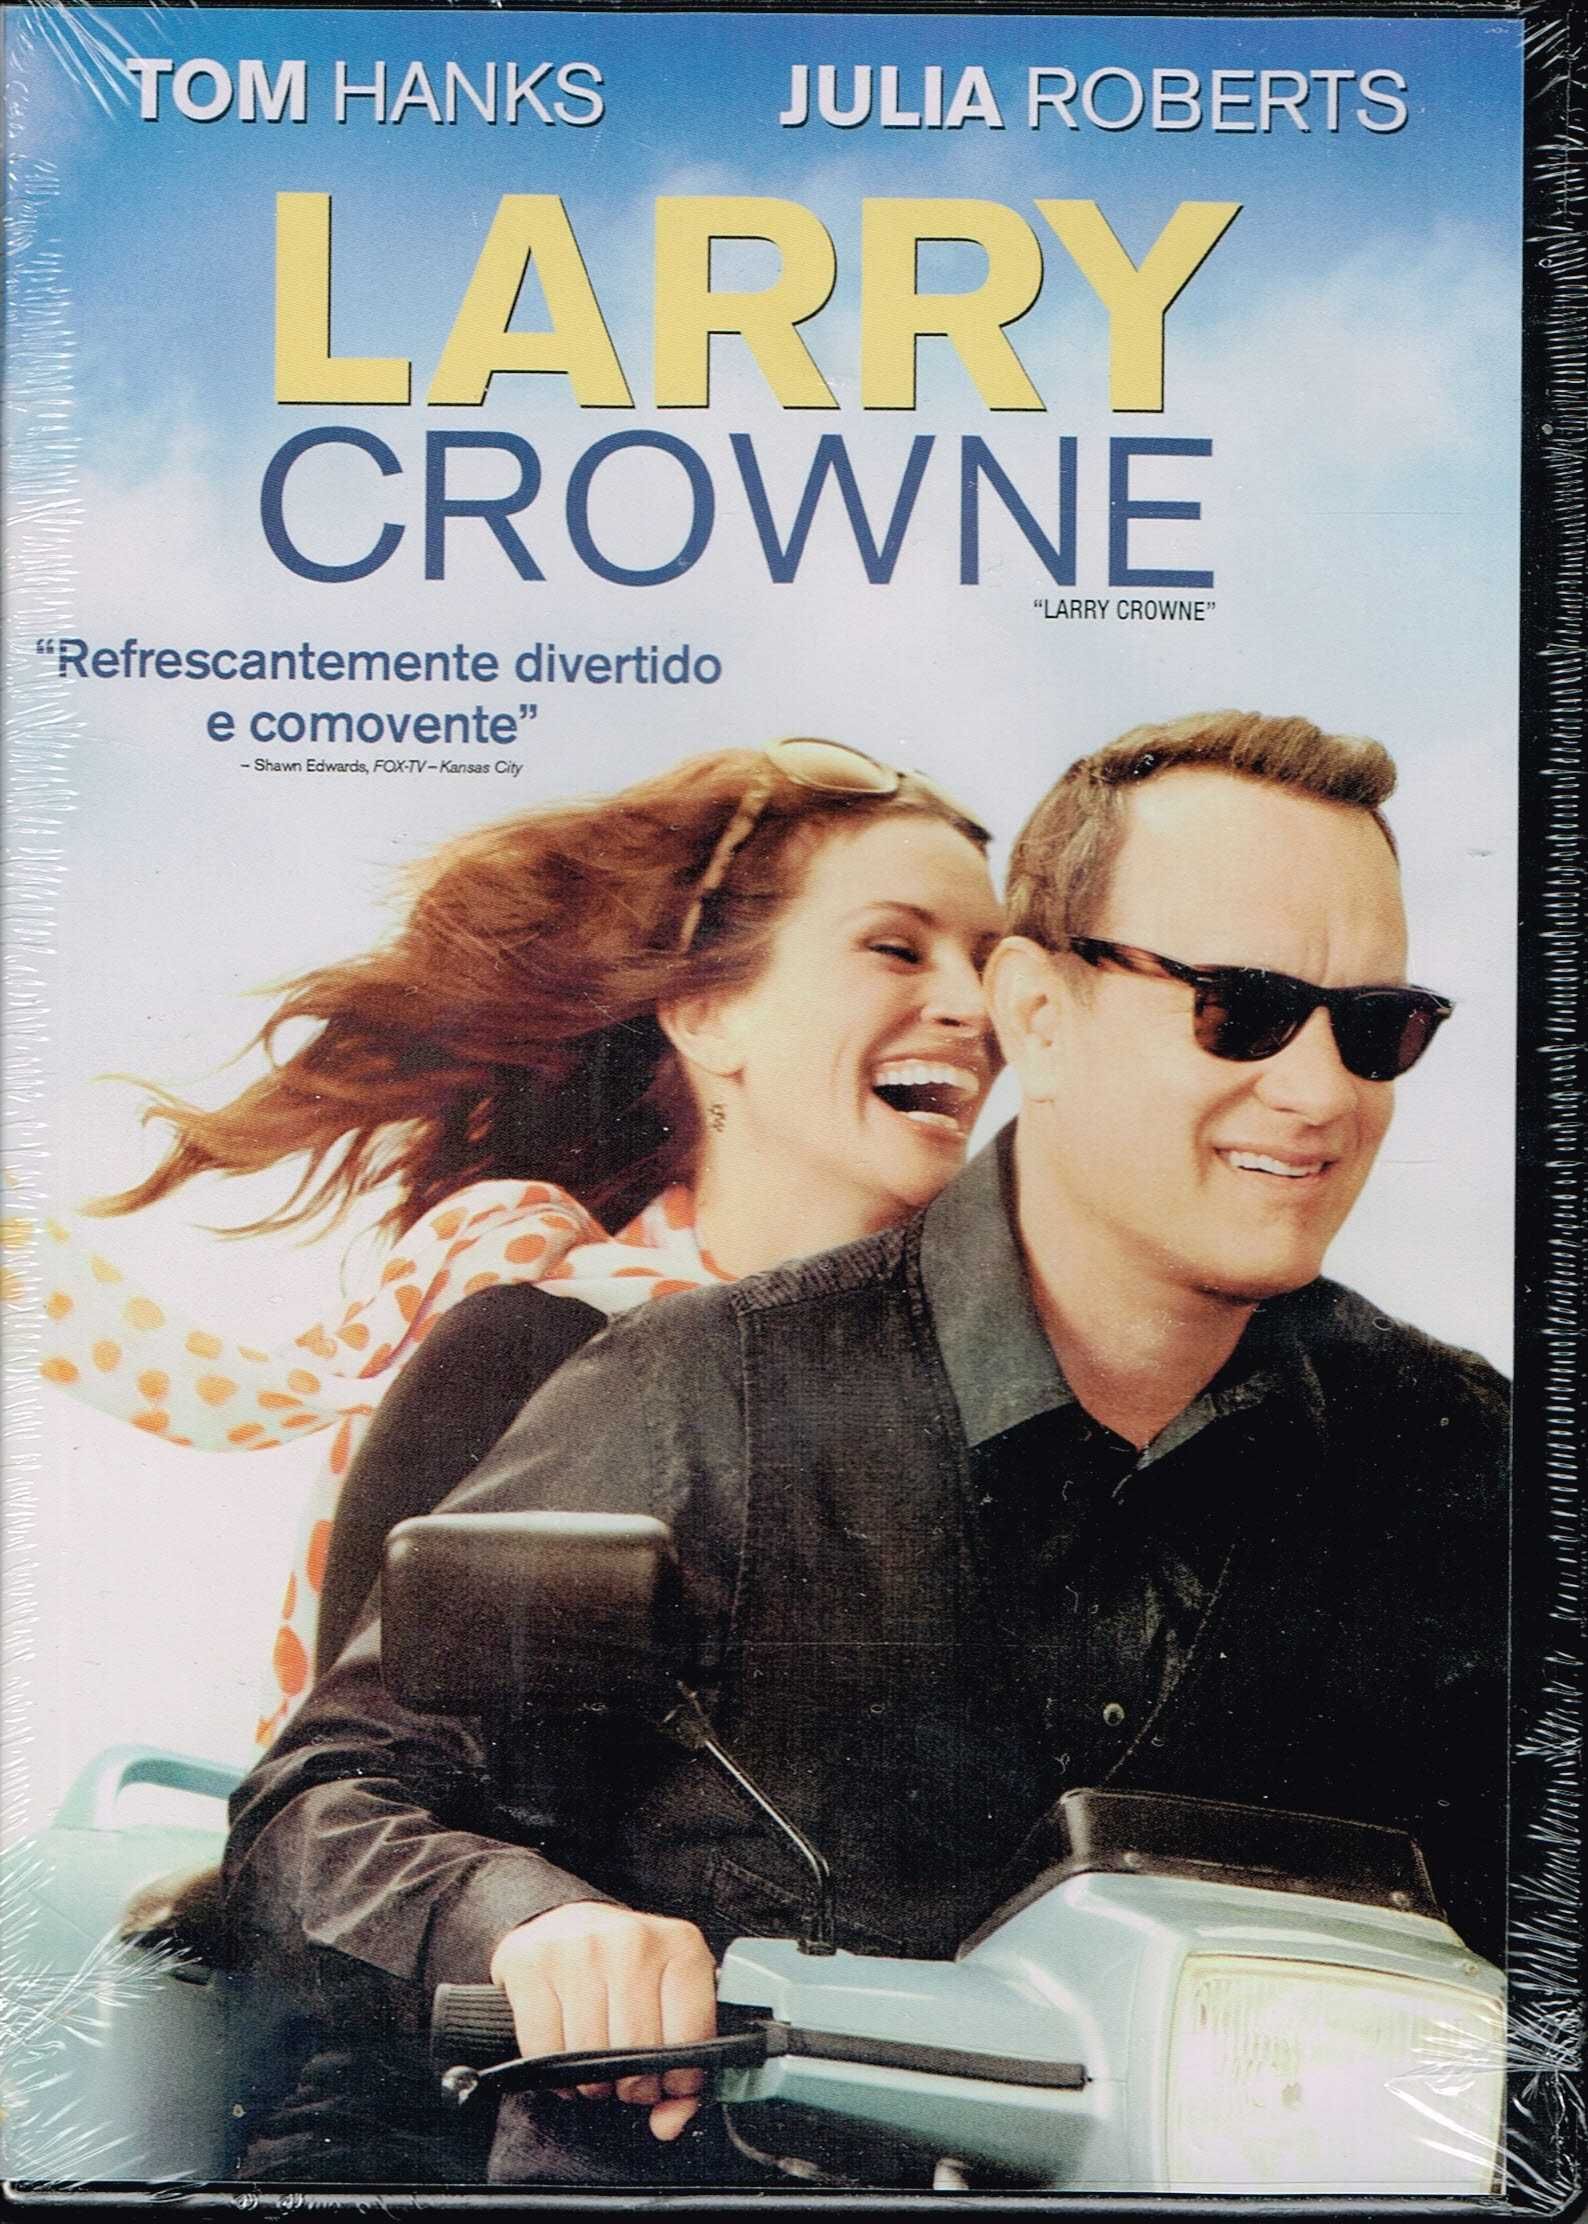 Filme em DVD: Larry Crowne (Julia Roberts, Tom Hanks) - NOVO! SELADO!